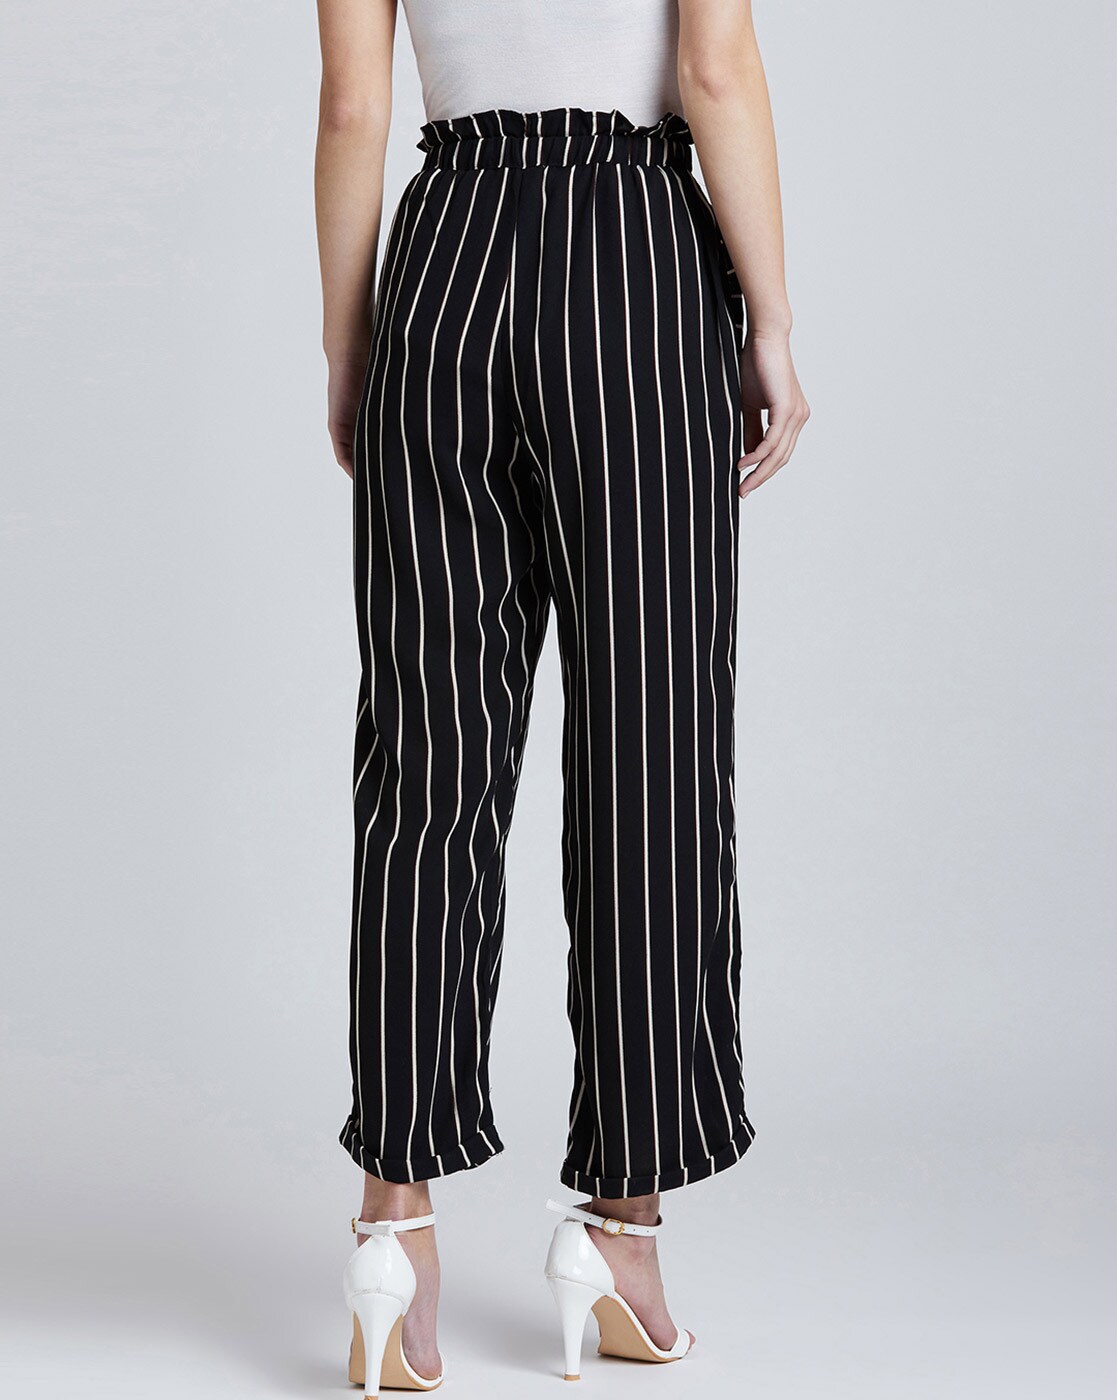 Buy AND Black & White Striped Pants for Women Online @ Tata CLiQ